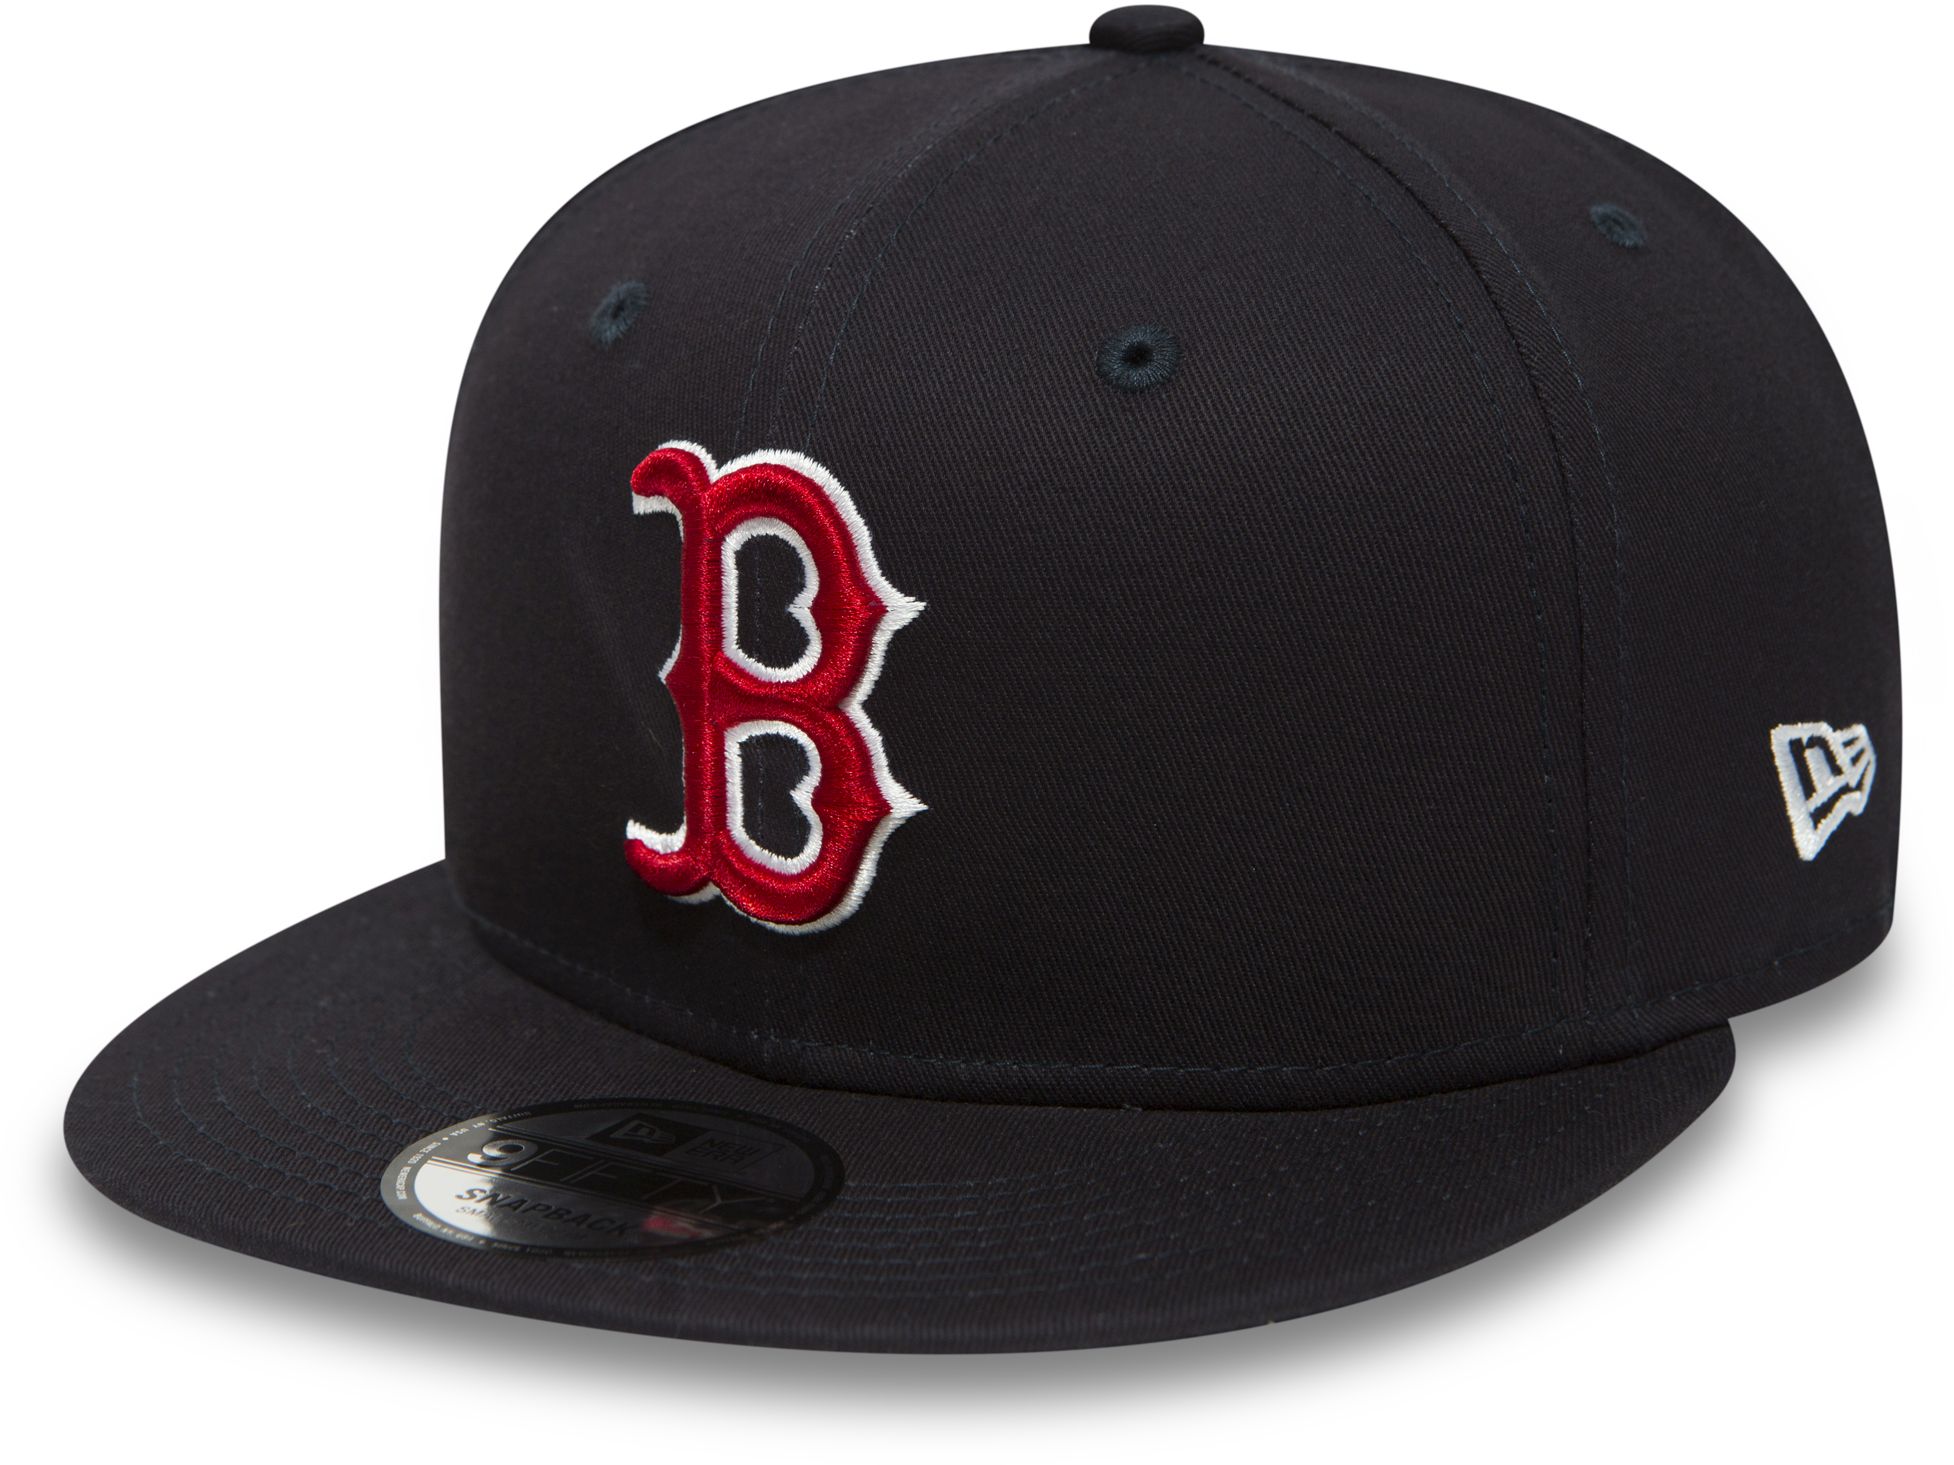 Men's club baseball cap